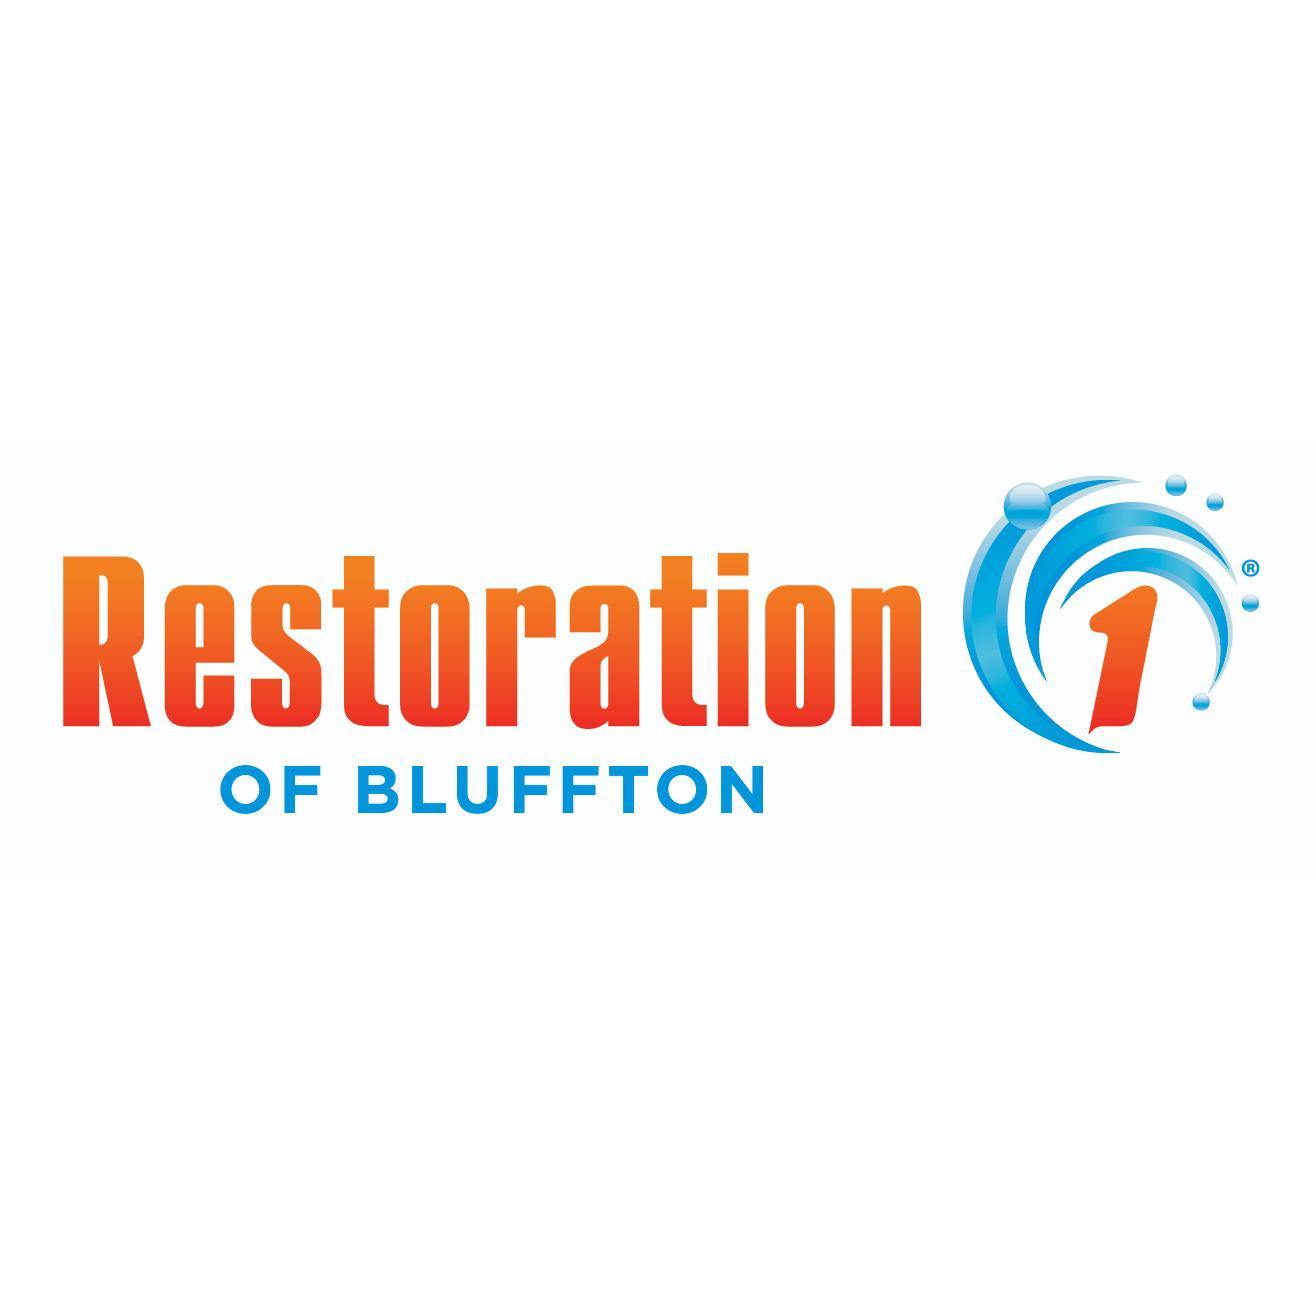 Restoration 1 of Bluffton